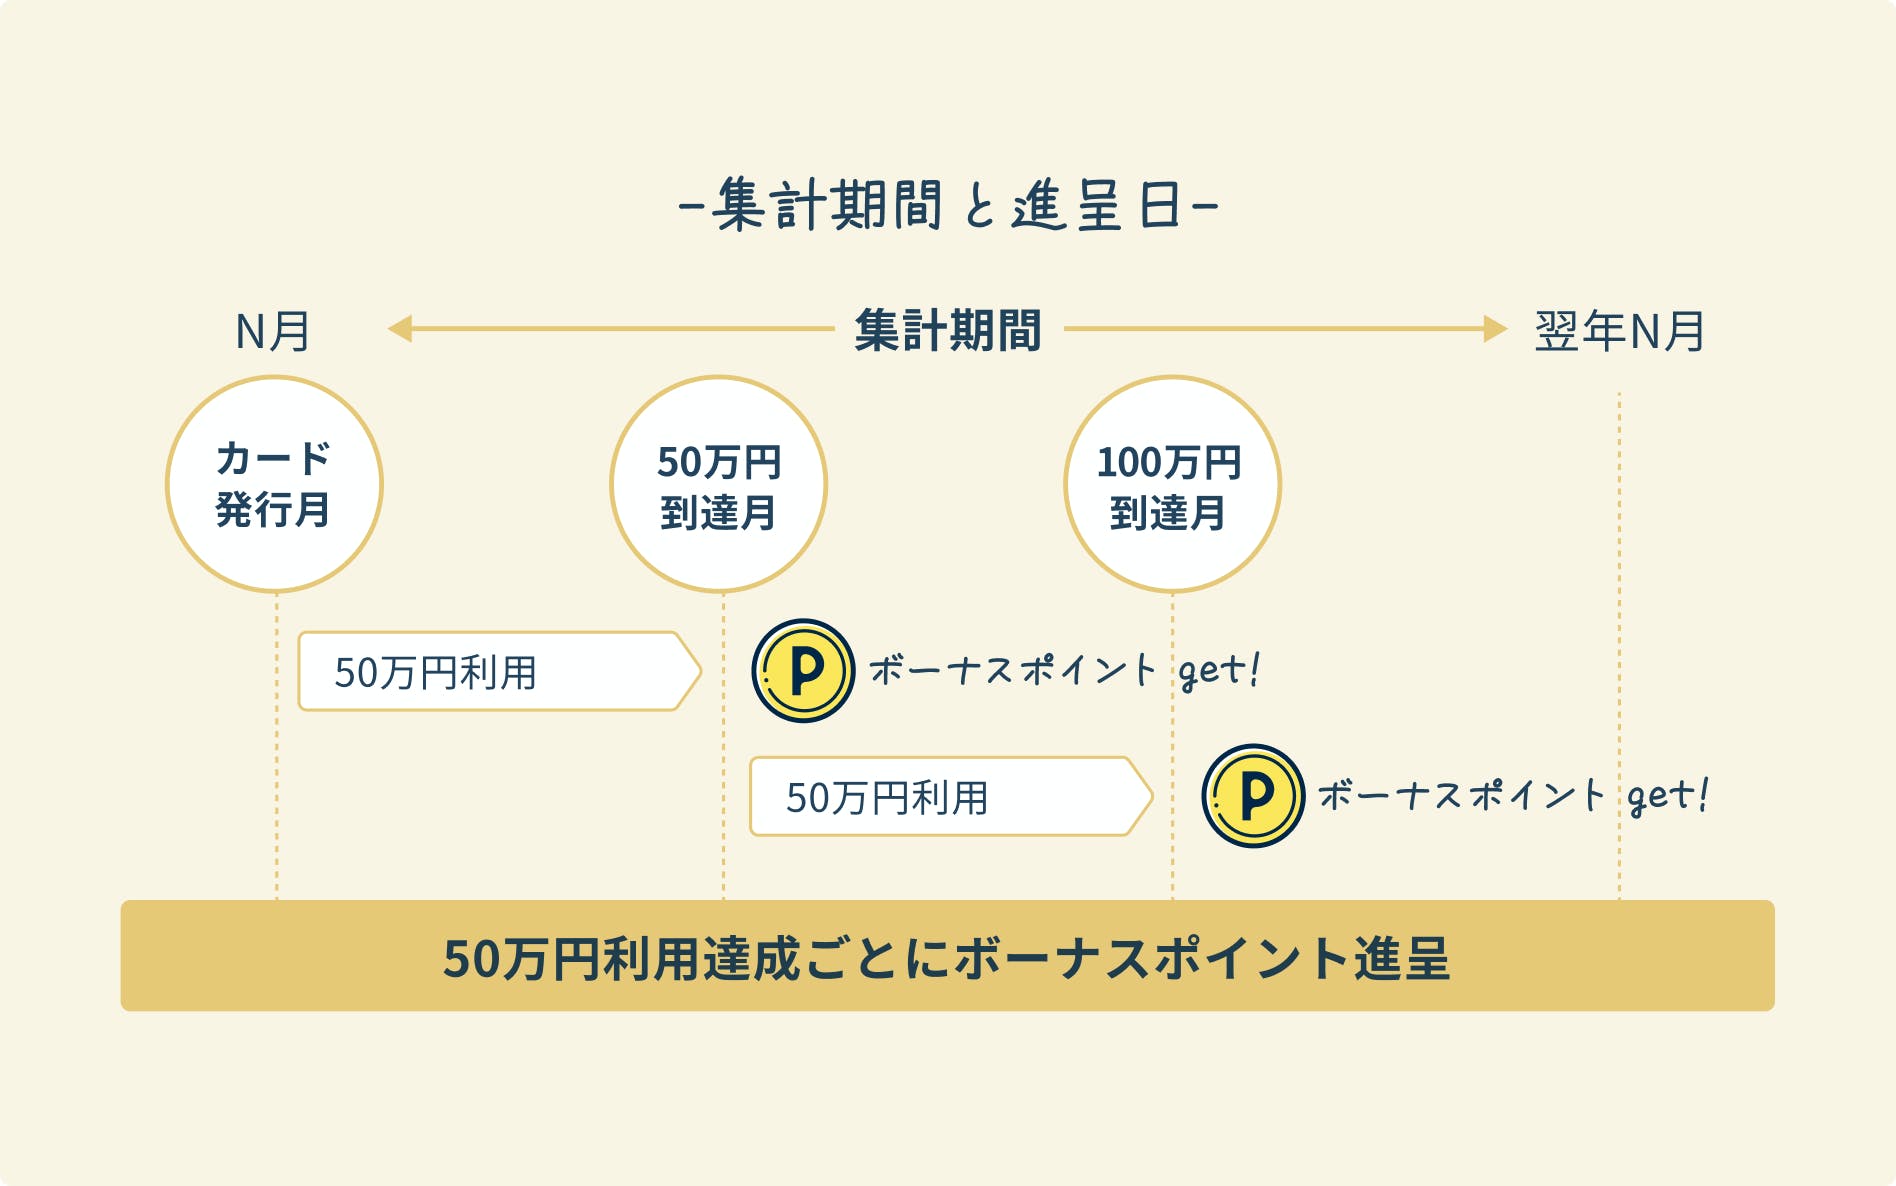 SAISON GOLD Premium が50万円ごとにボーナスポイント進呈！最大還元率1%になる仕組み